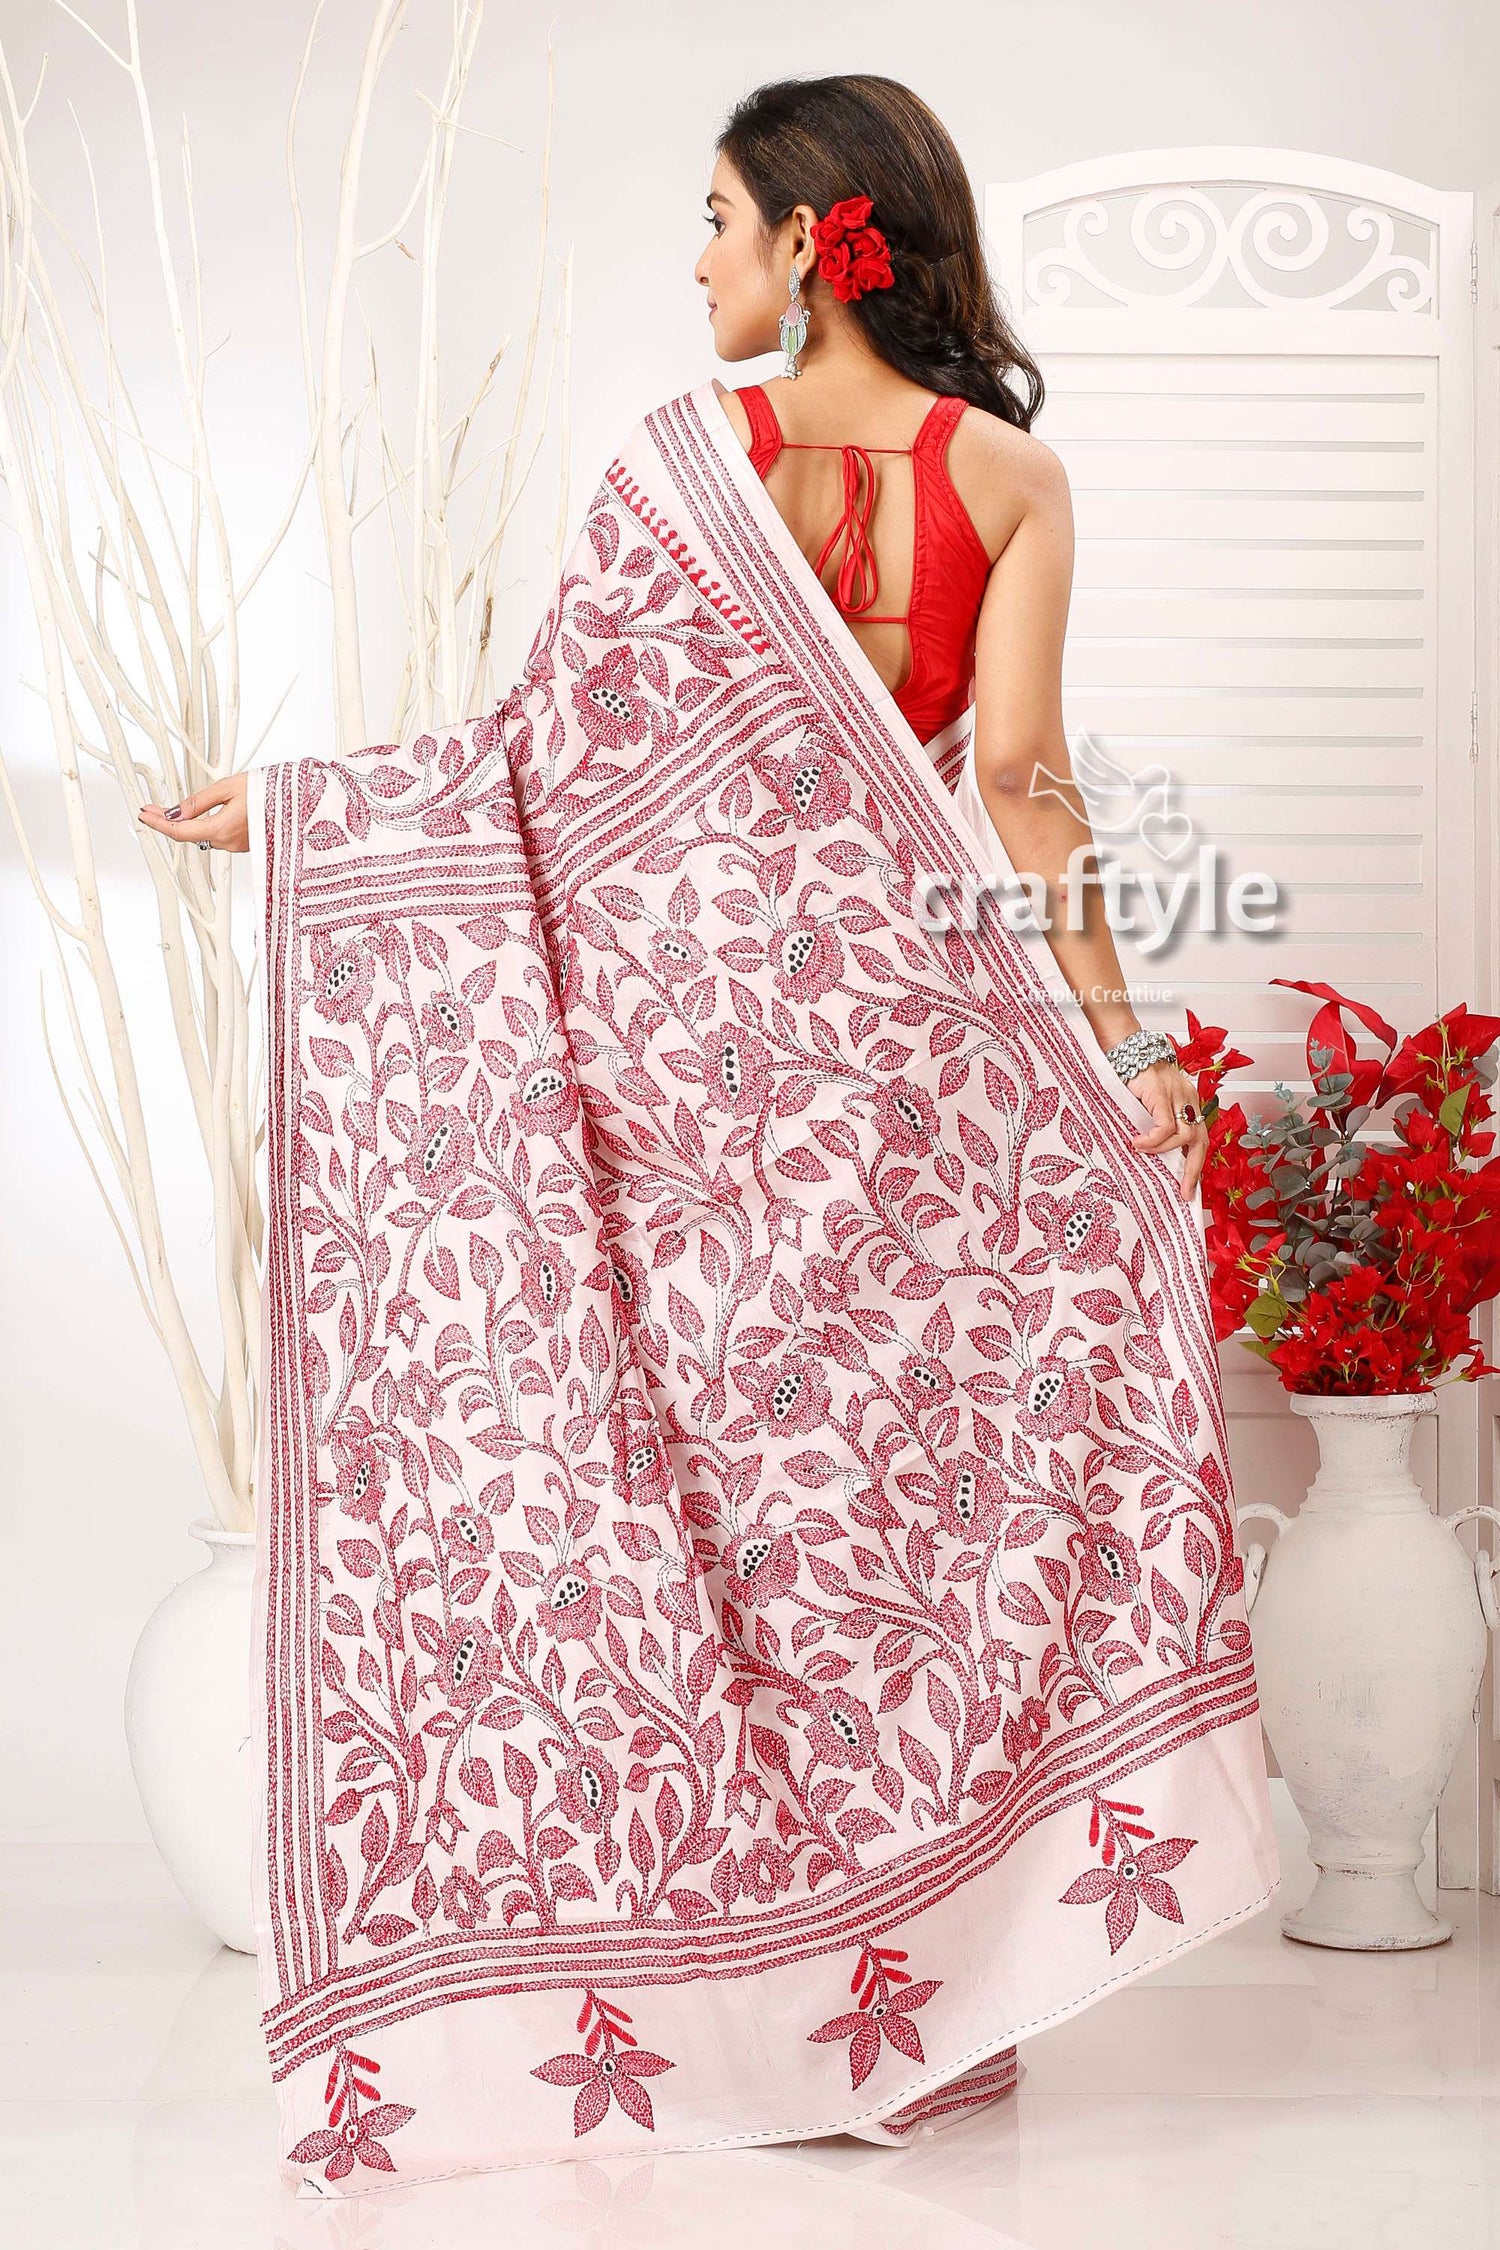 Pinkish White and Red Blossom Theme Silk Kantha Stitch Saree - Craftyle